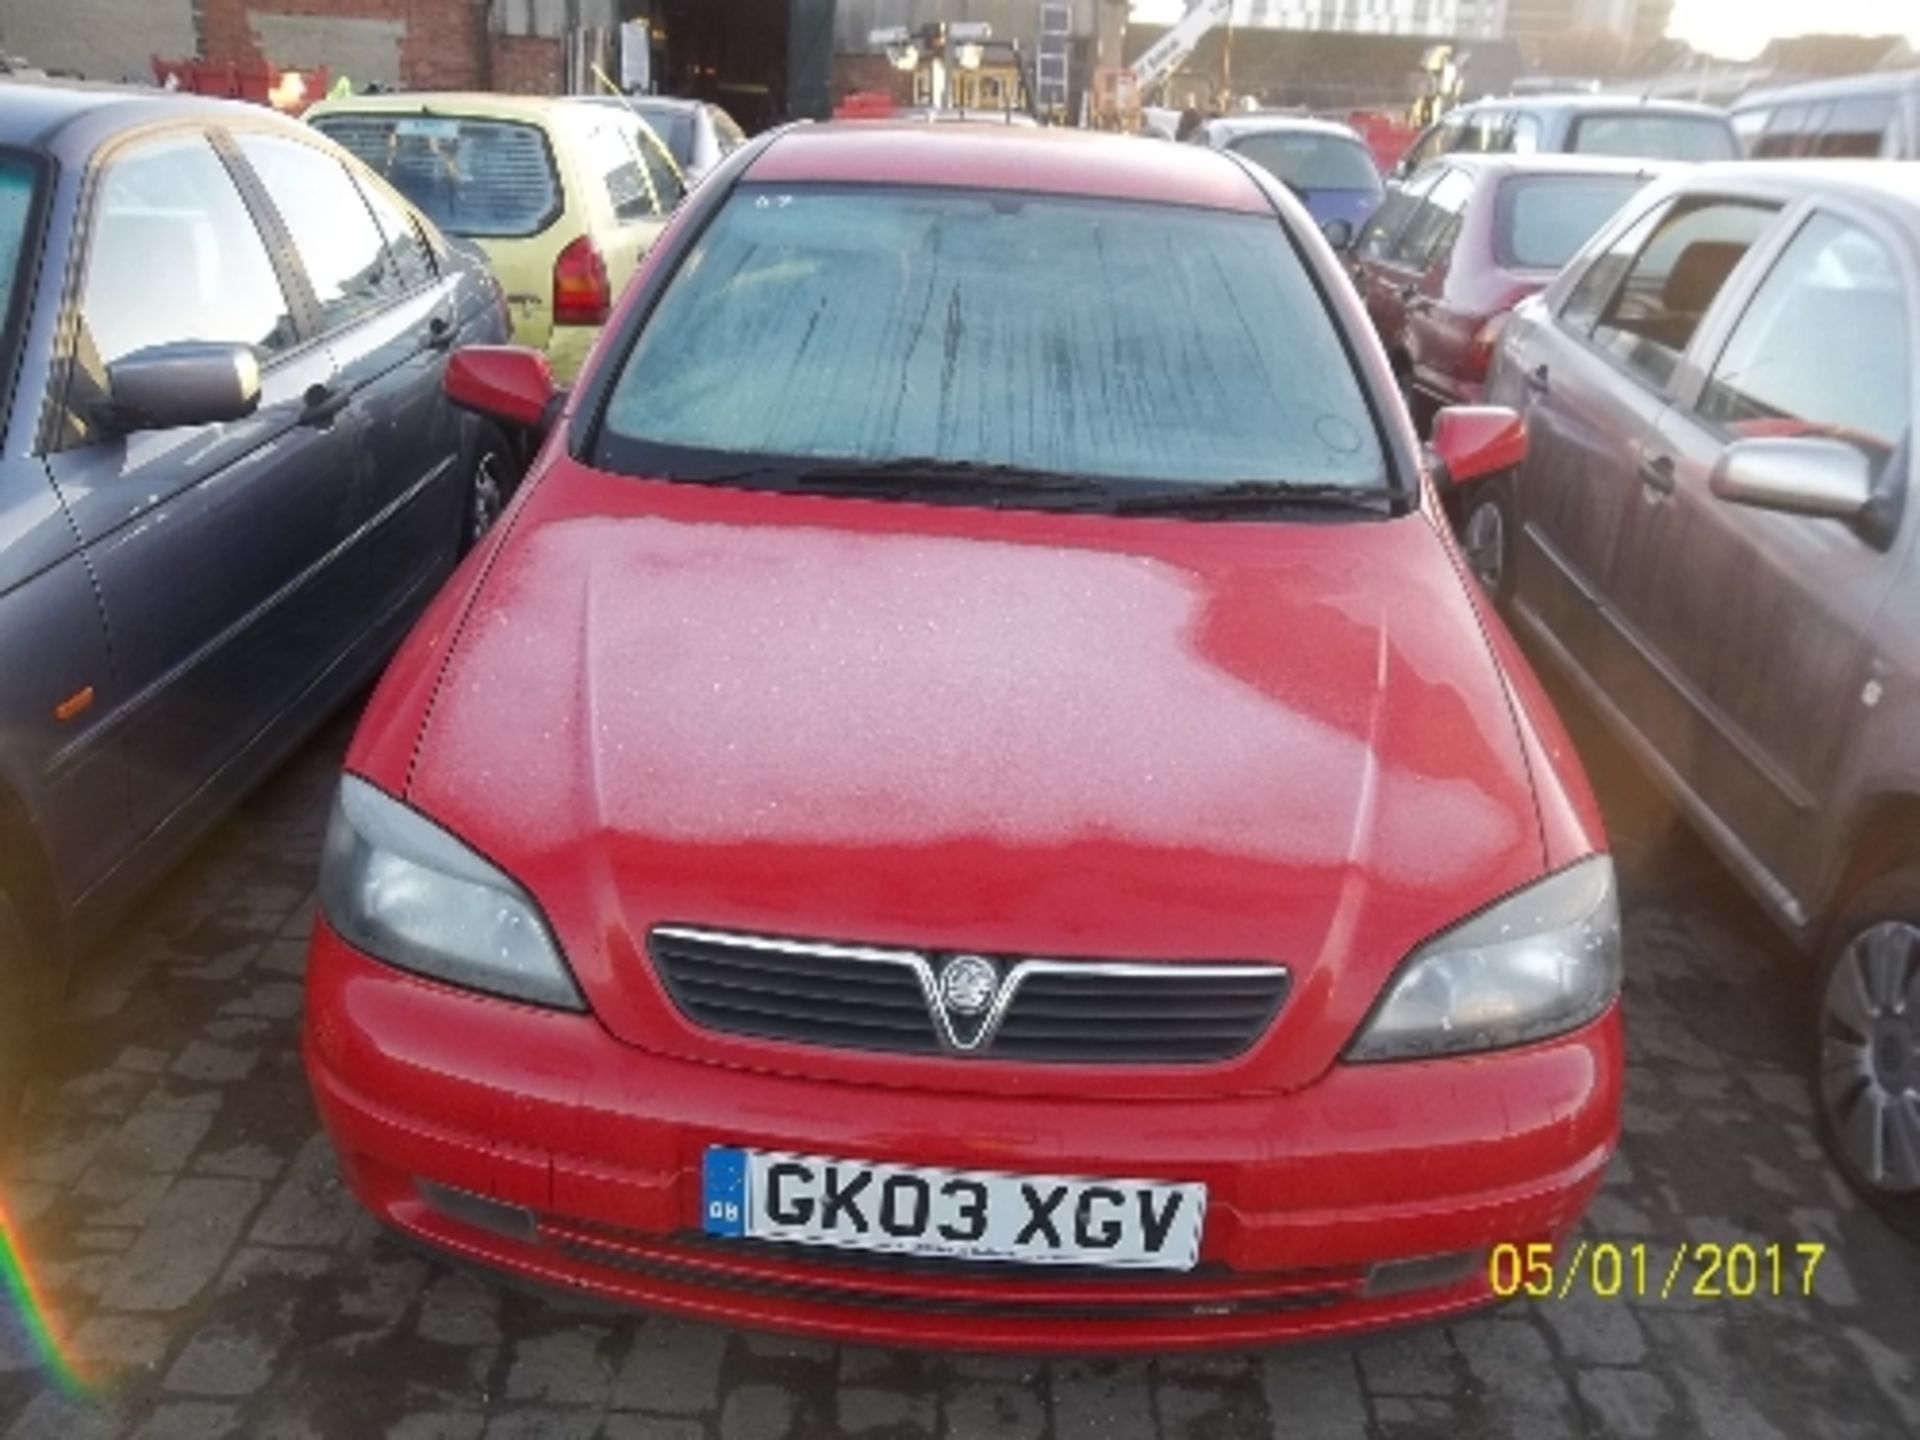 Vauxhall Astra SXI 16V - GK03 XGV Date of registration: 01.03.2003 1598cc, petrol, manual, red